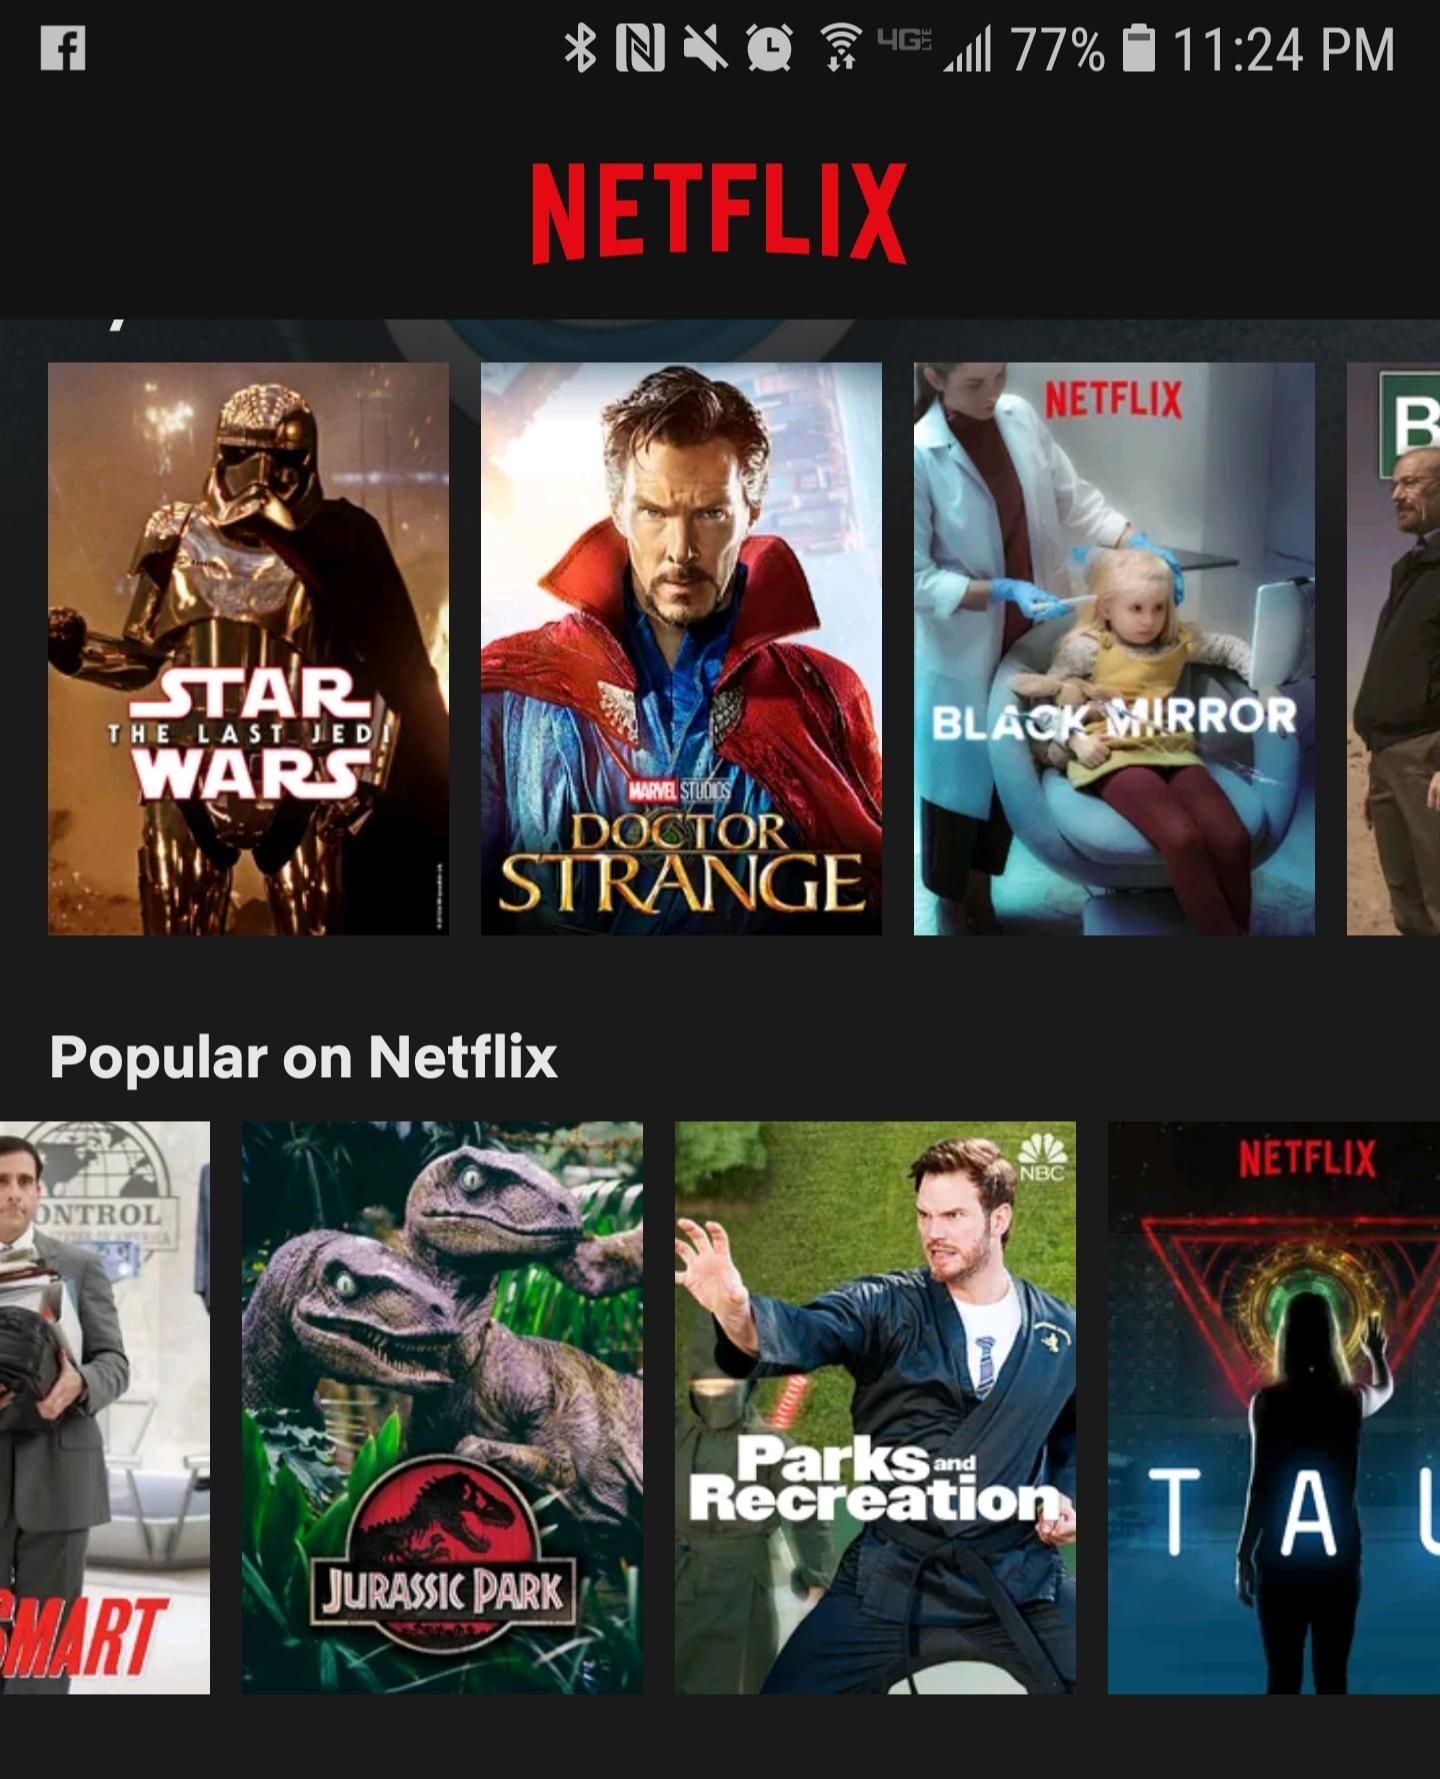 Jurassic Park next to Parks & Rec on Netflix